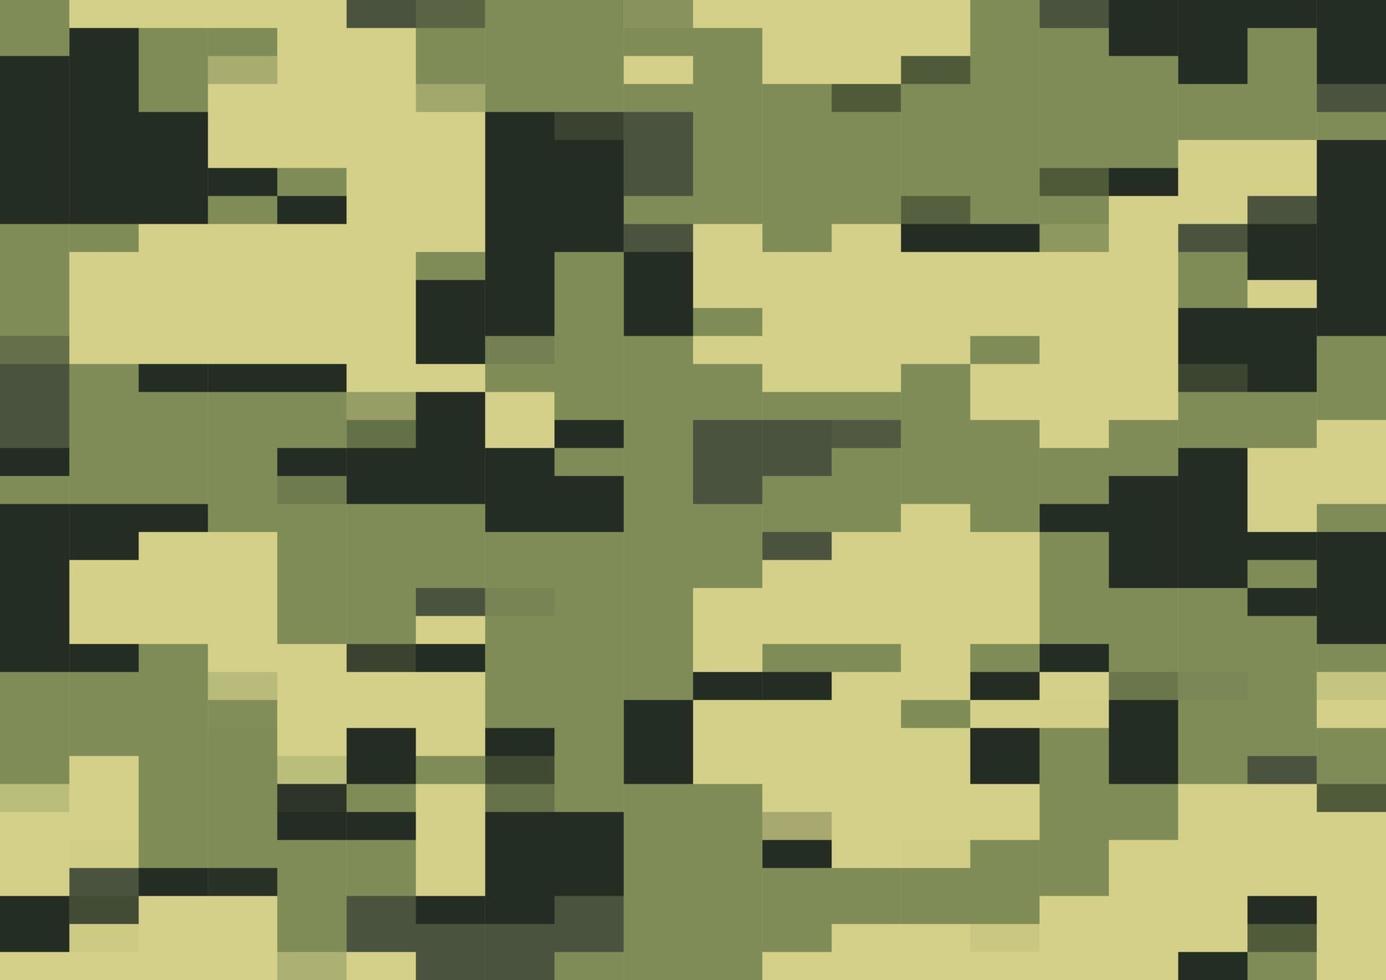 grön digi camo vektor, seamless mönster. multi-scale modern 8bit pixel kamouflage i oliv, grön och djungel toner. digicamo design. vektor